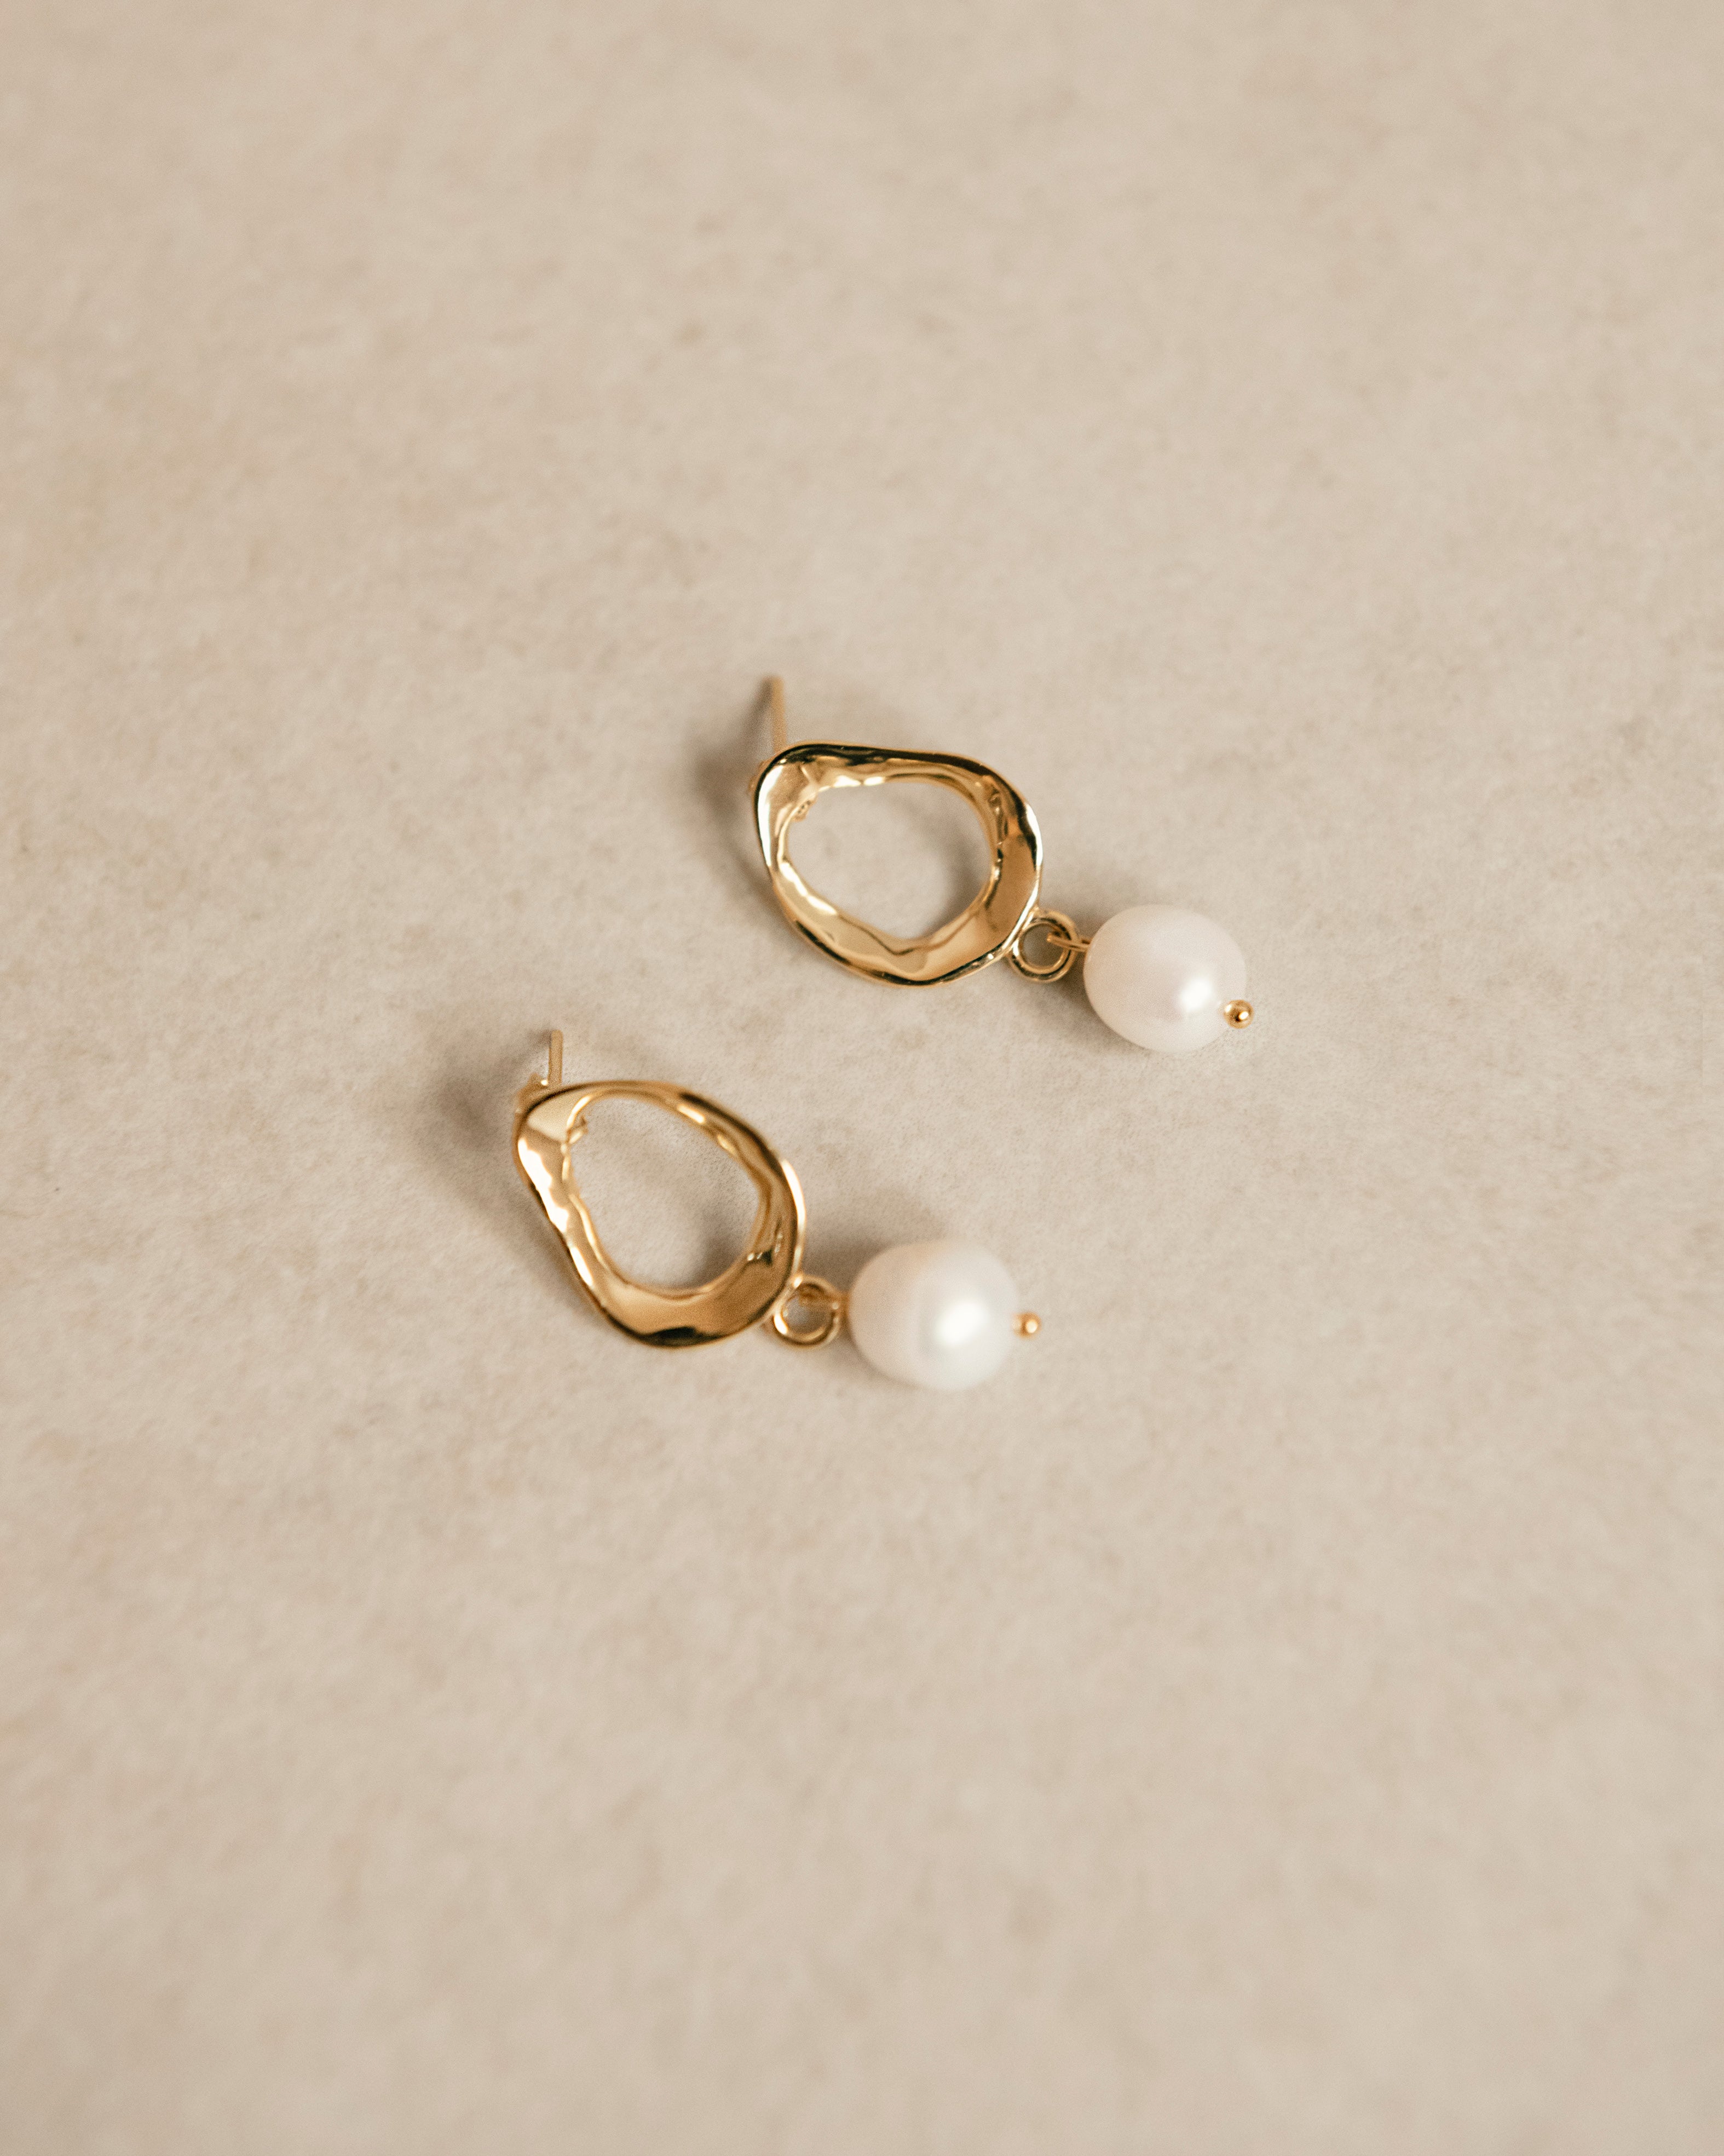 earrings on table